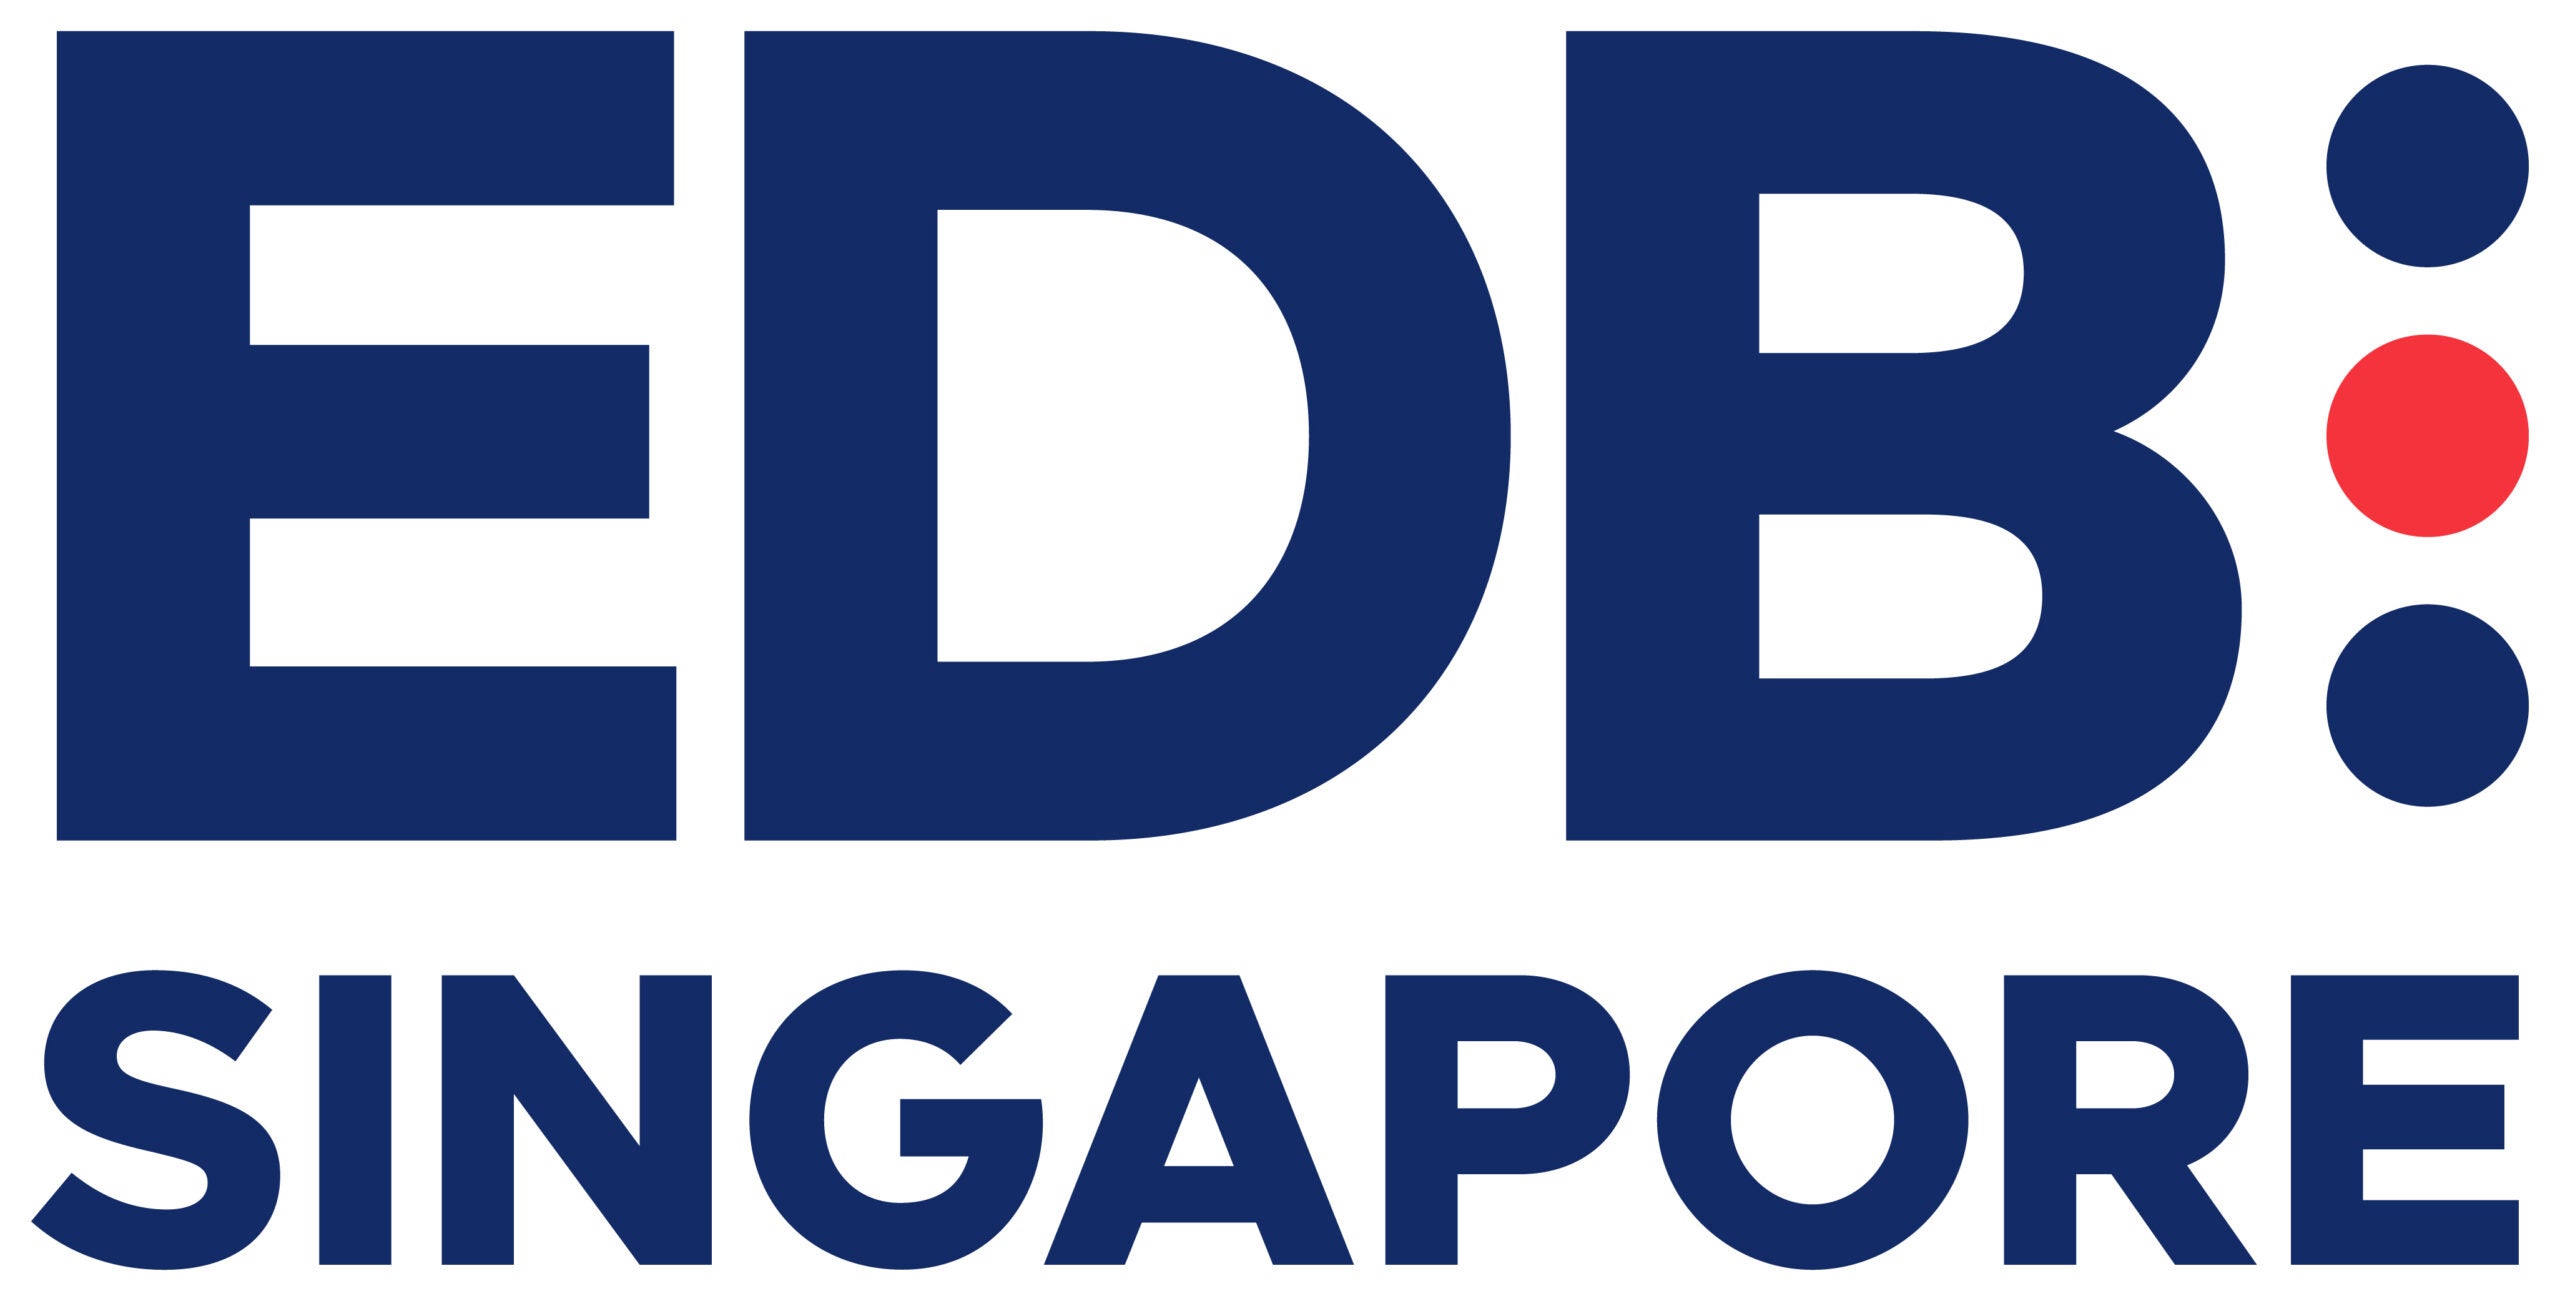 In association with EDB Singapore